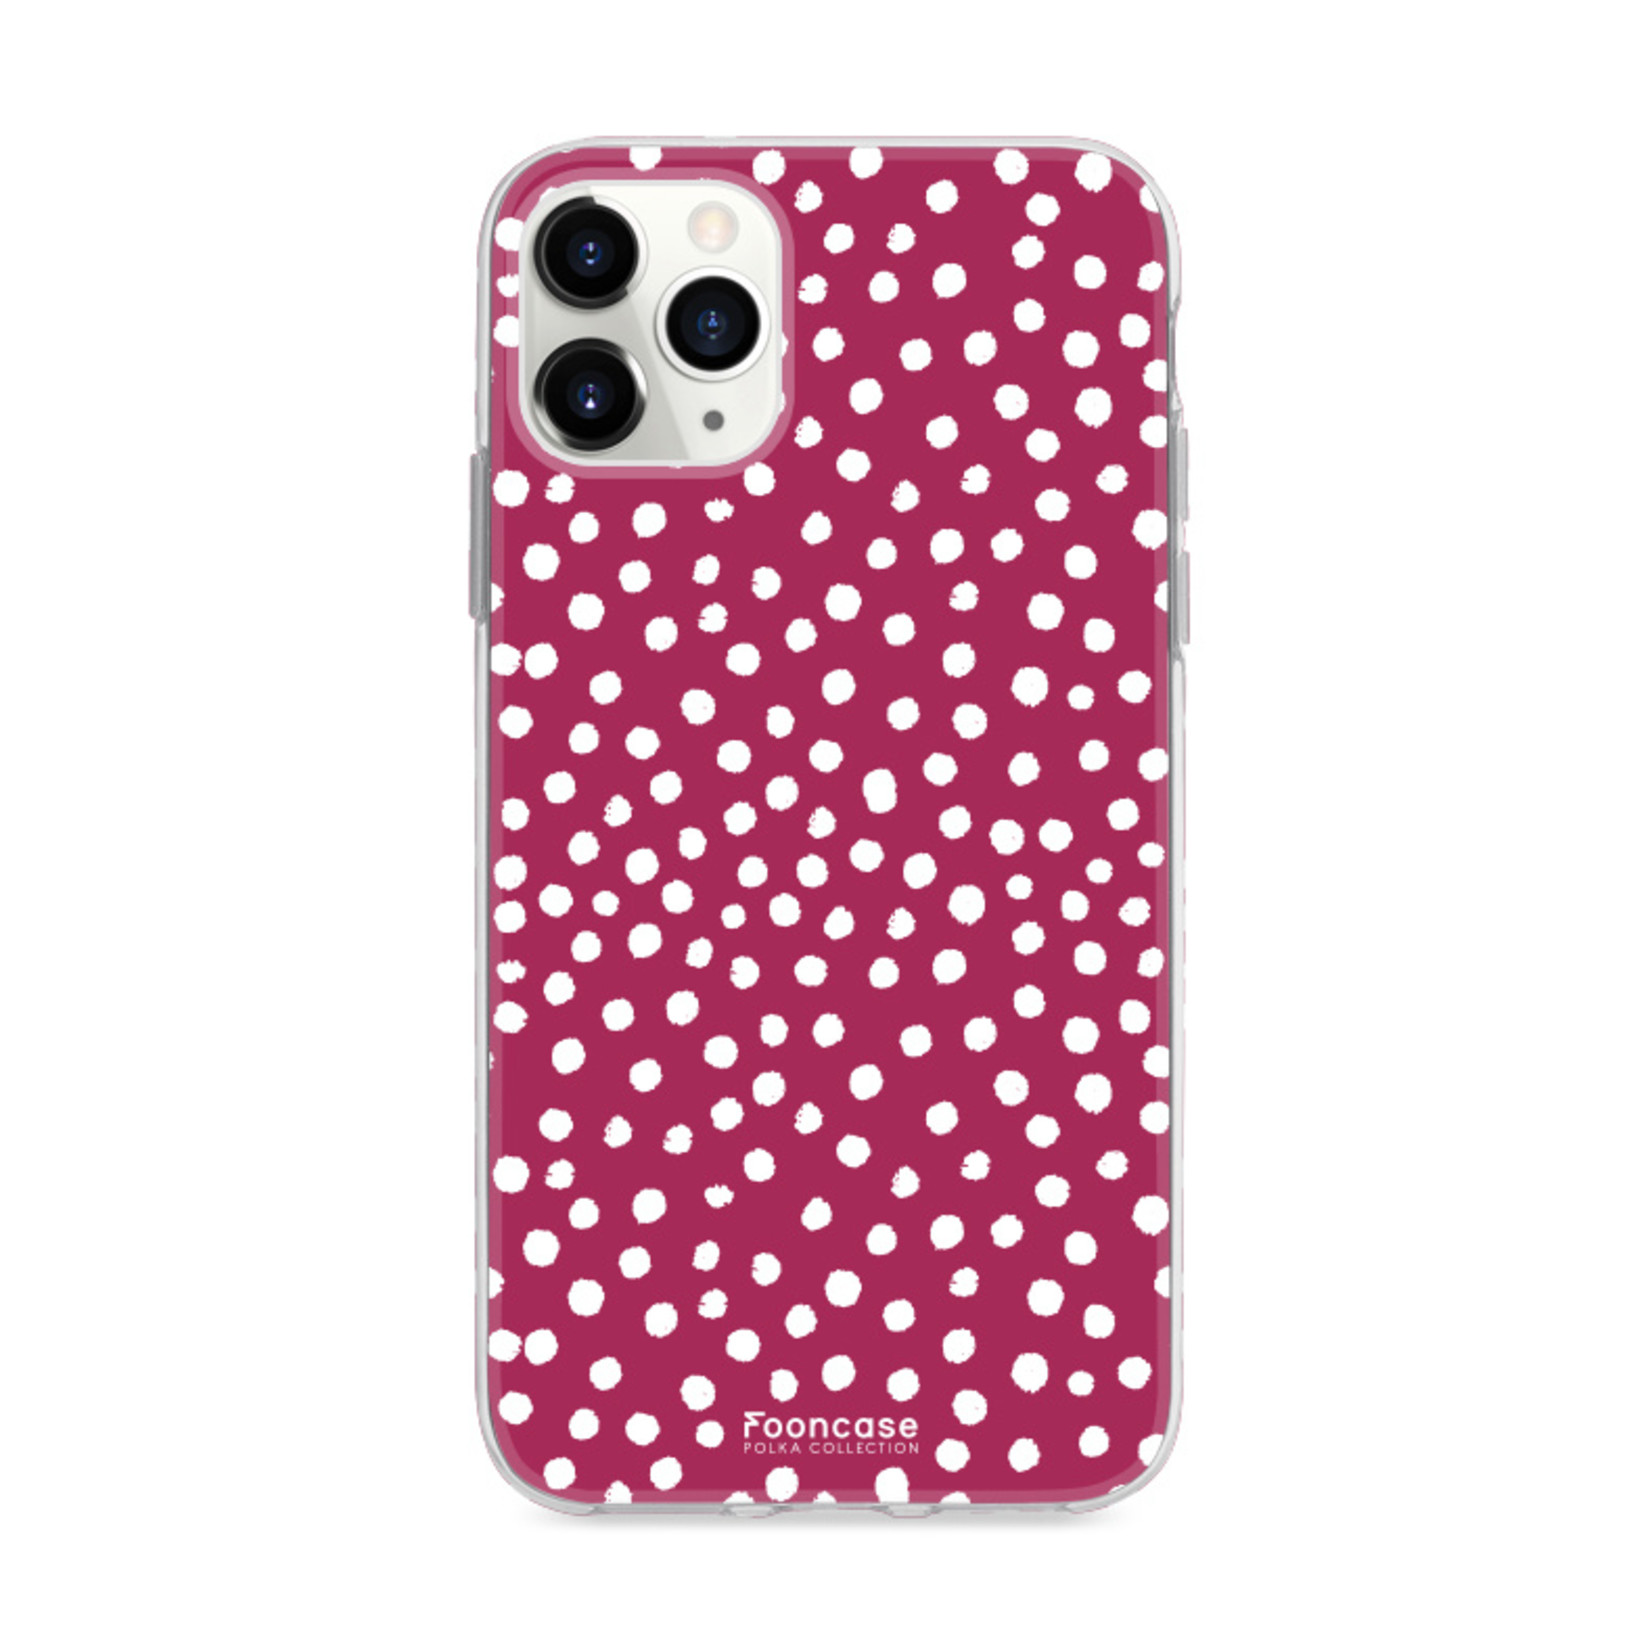 FOONCASE iPhone 11 Pro Max hoesje TPU Soft Case - Back Cover - POLKA / Stipjes / Stippen / Bordeaux Rood